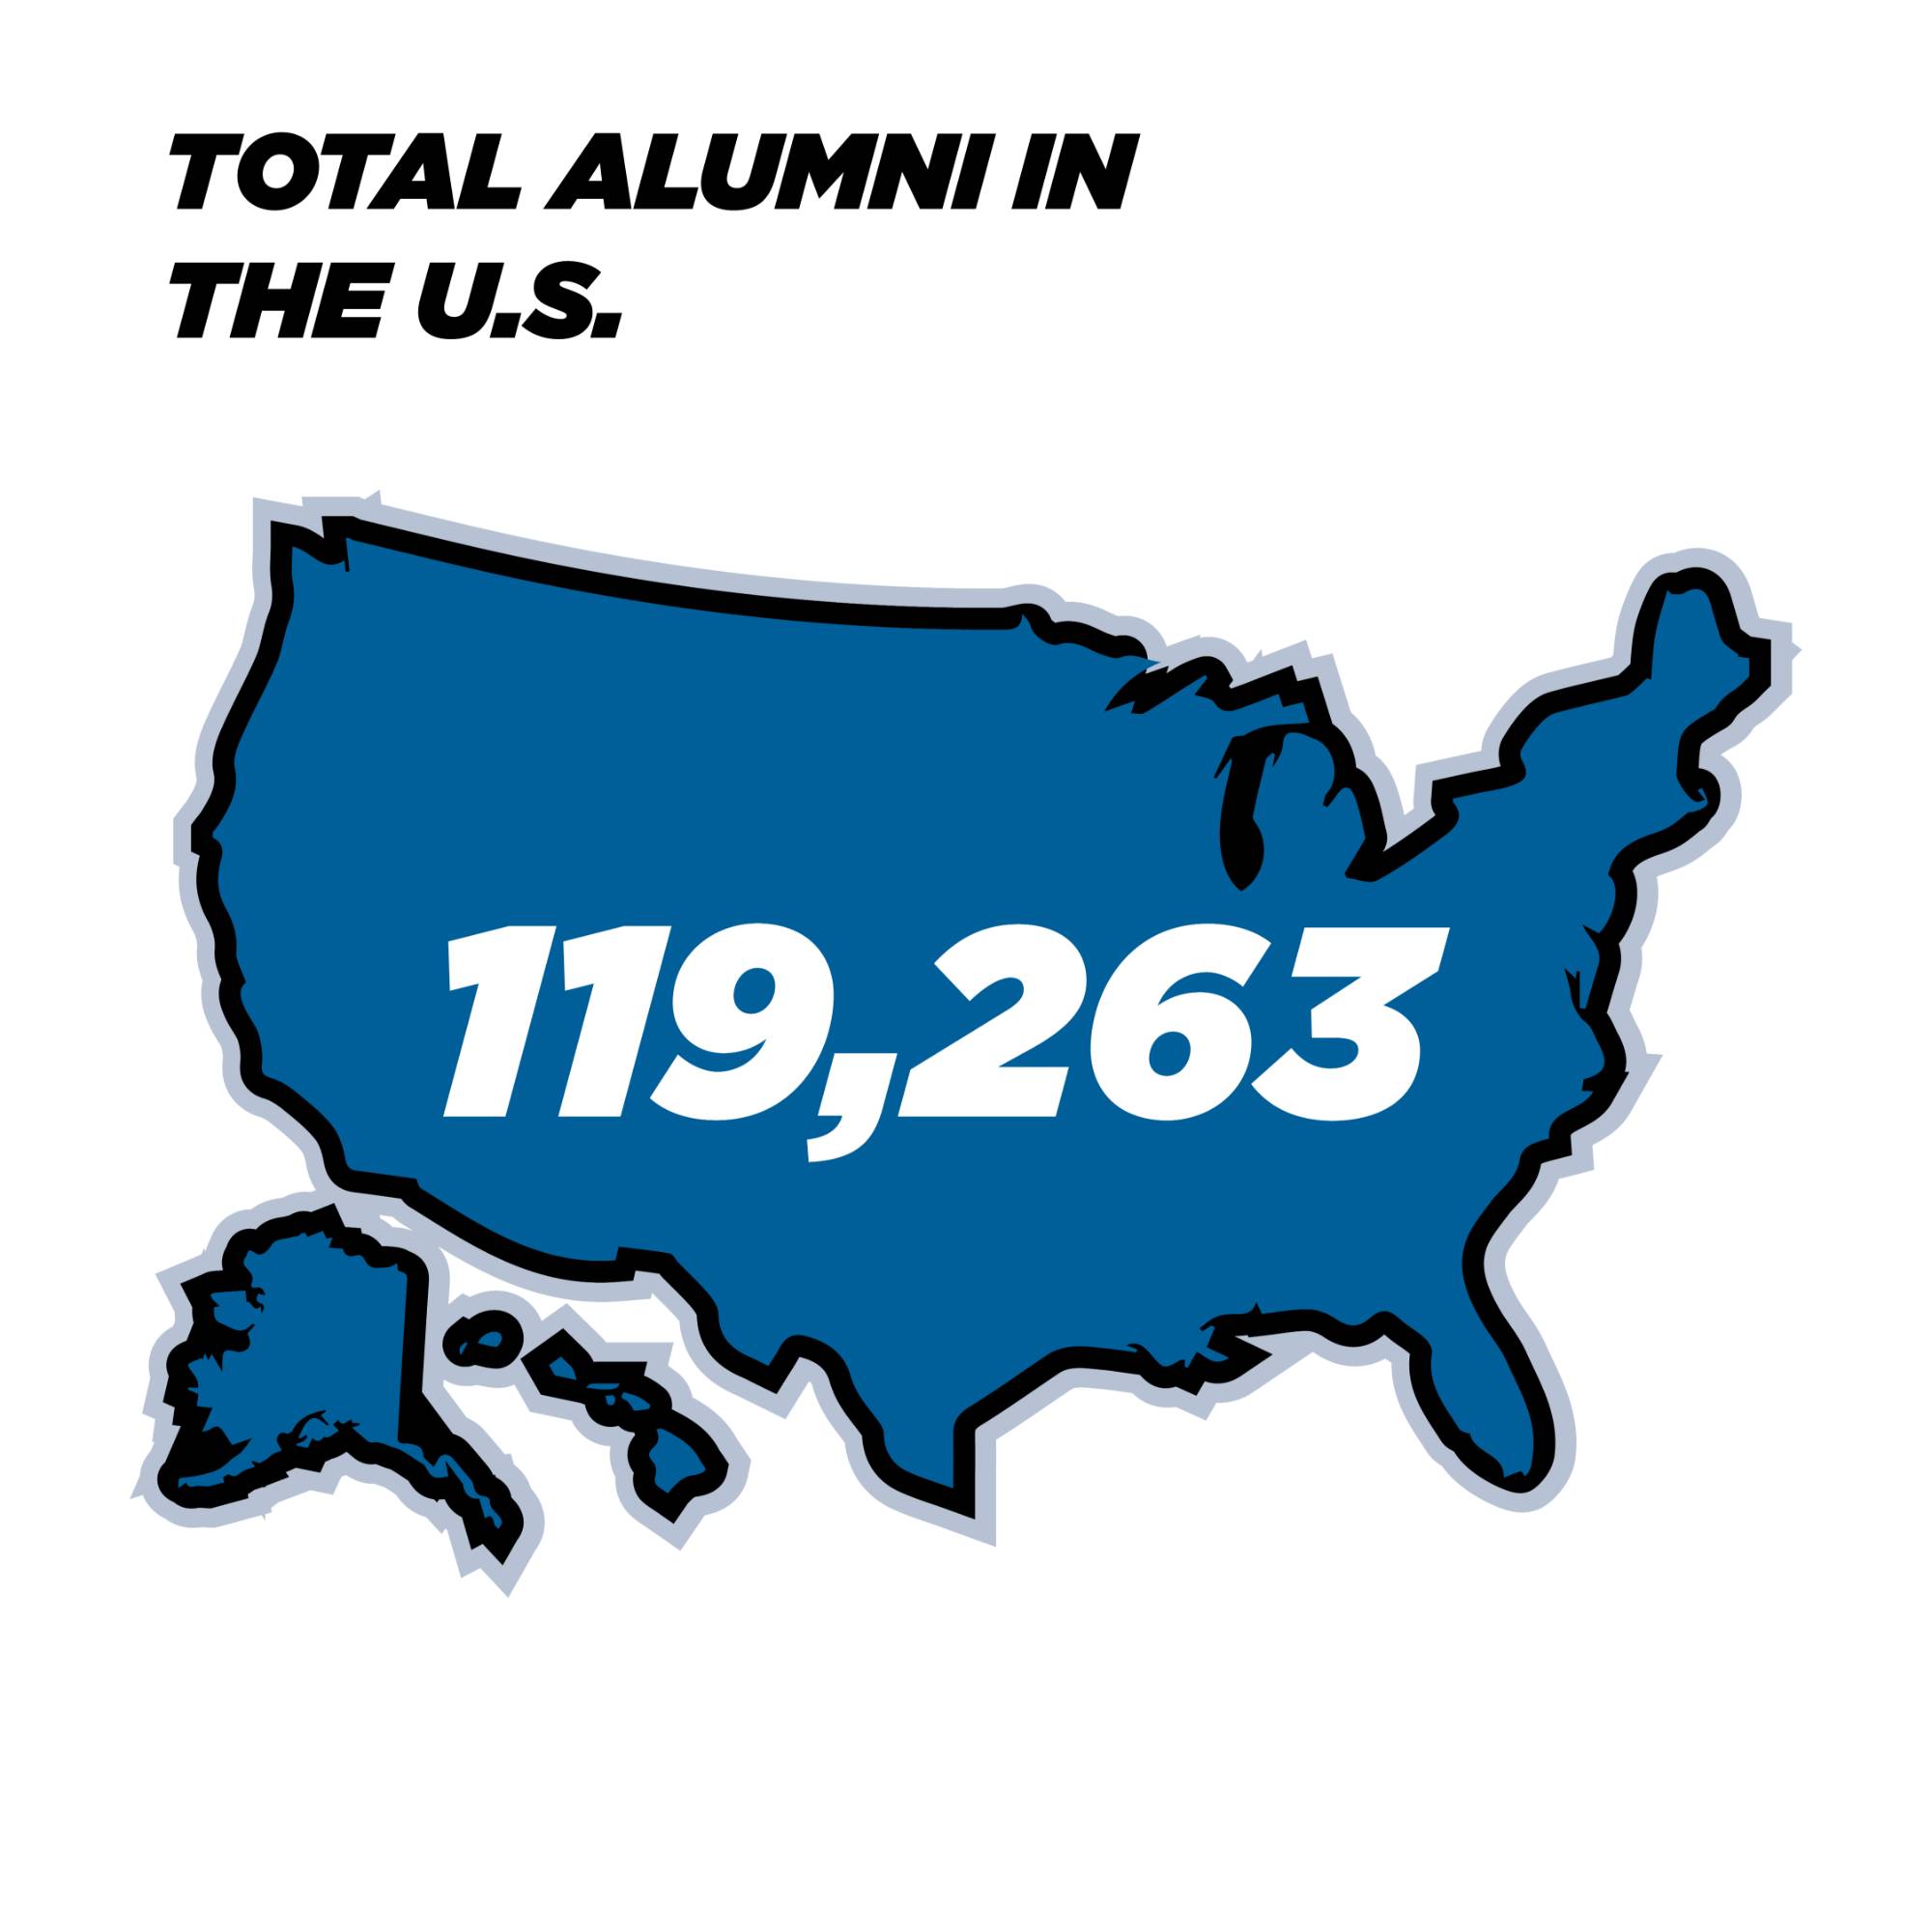 Alumni Number in US: 119,263